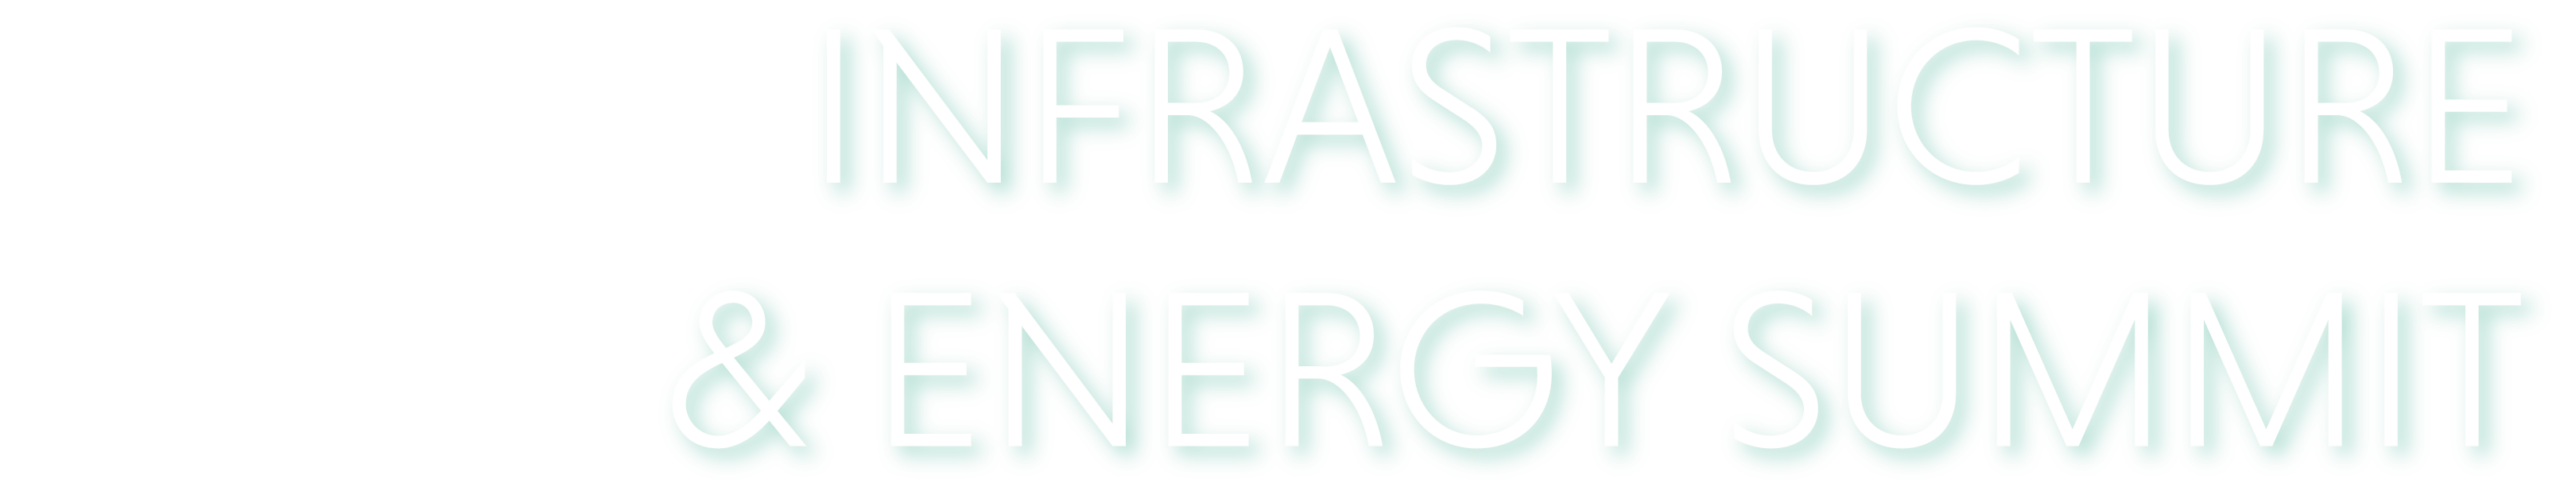 EV Infrastructure & Energy Summit Logo